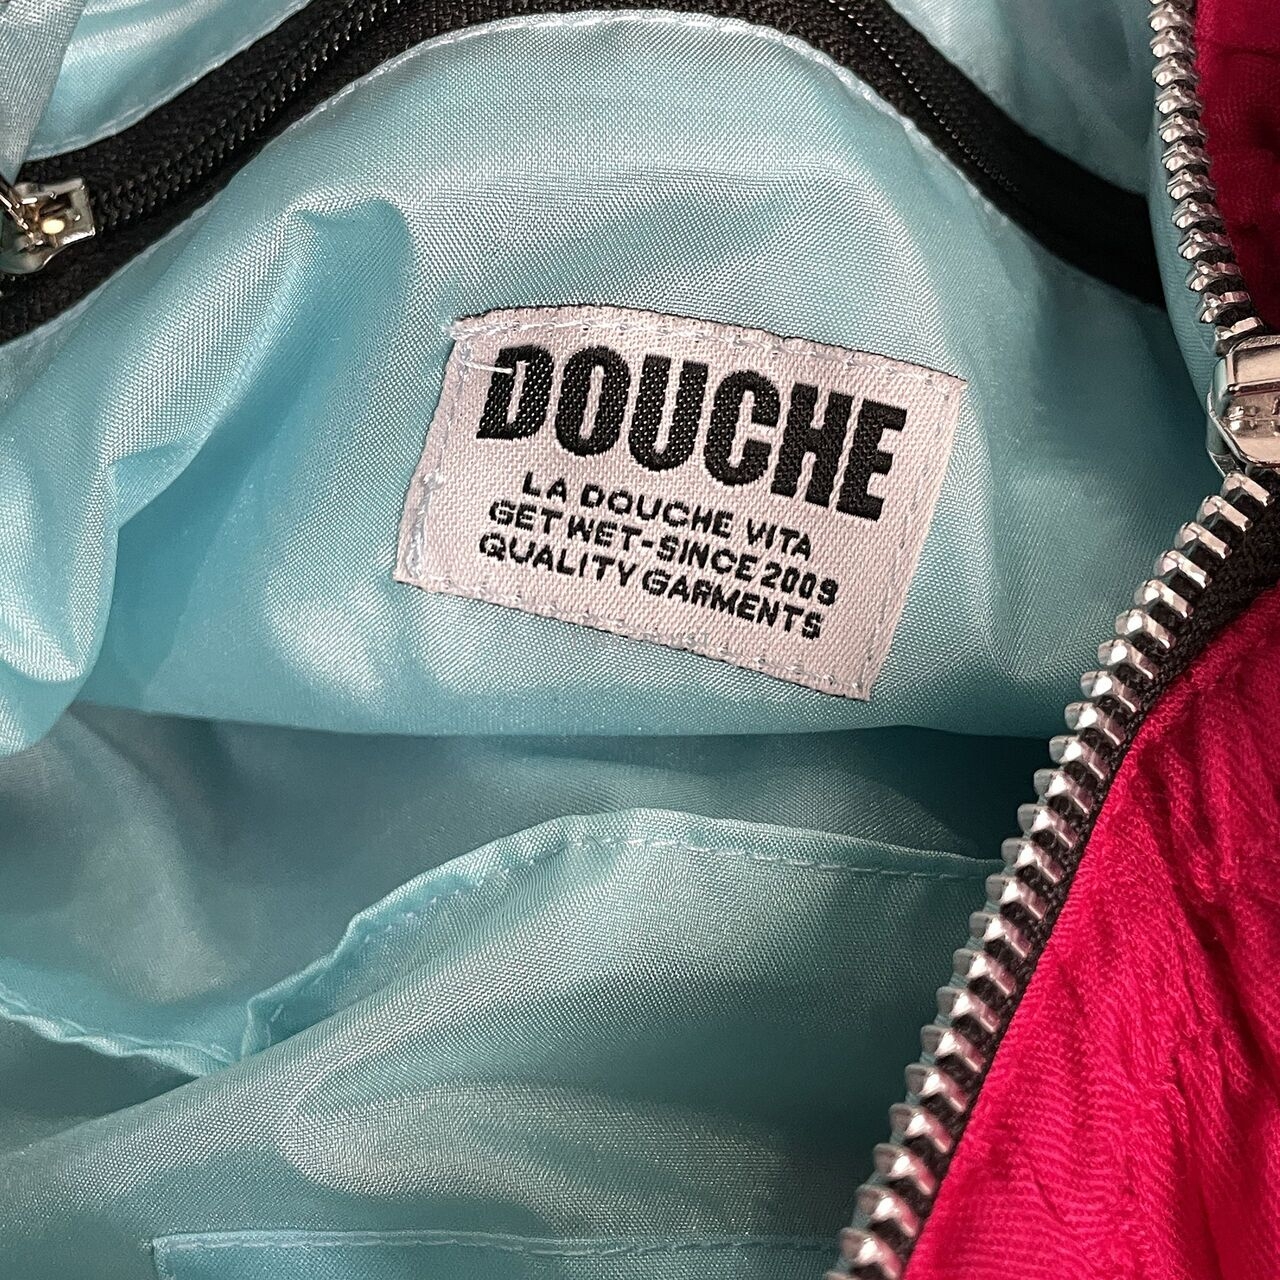 Douche Dark Pink Shoulder Bag